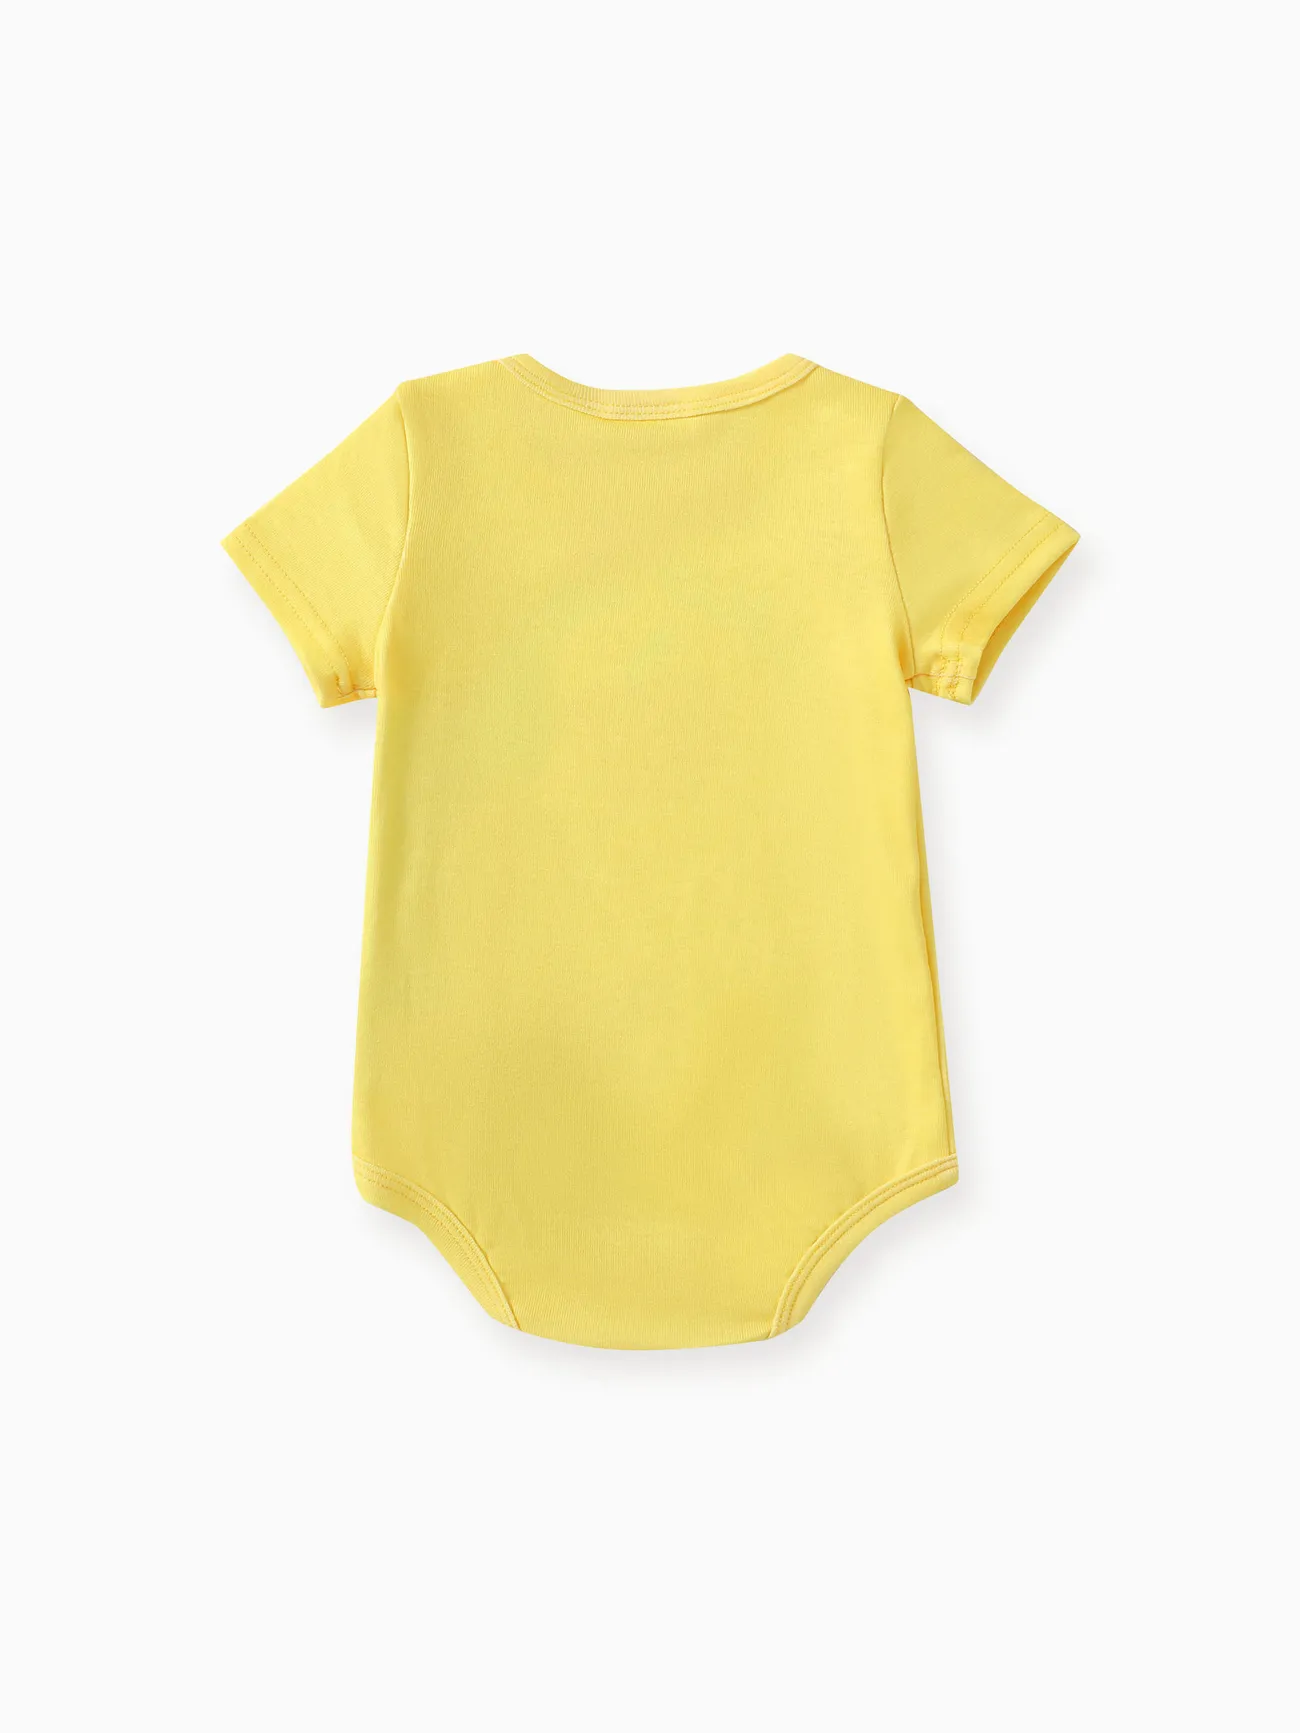 Disney Winnie the Pooh Baby Boys/Girls 1pc Naia™ Fun Character Fruit/Striped Print Short-sleeve Romper Yellow big image 1